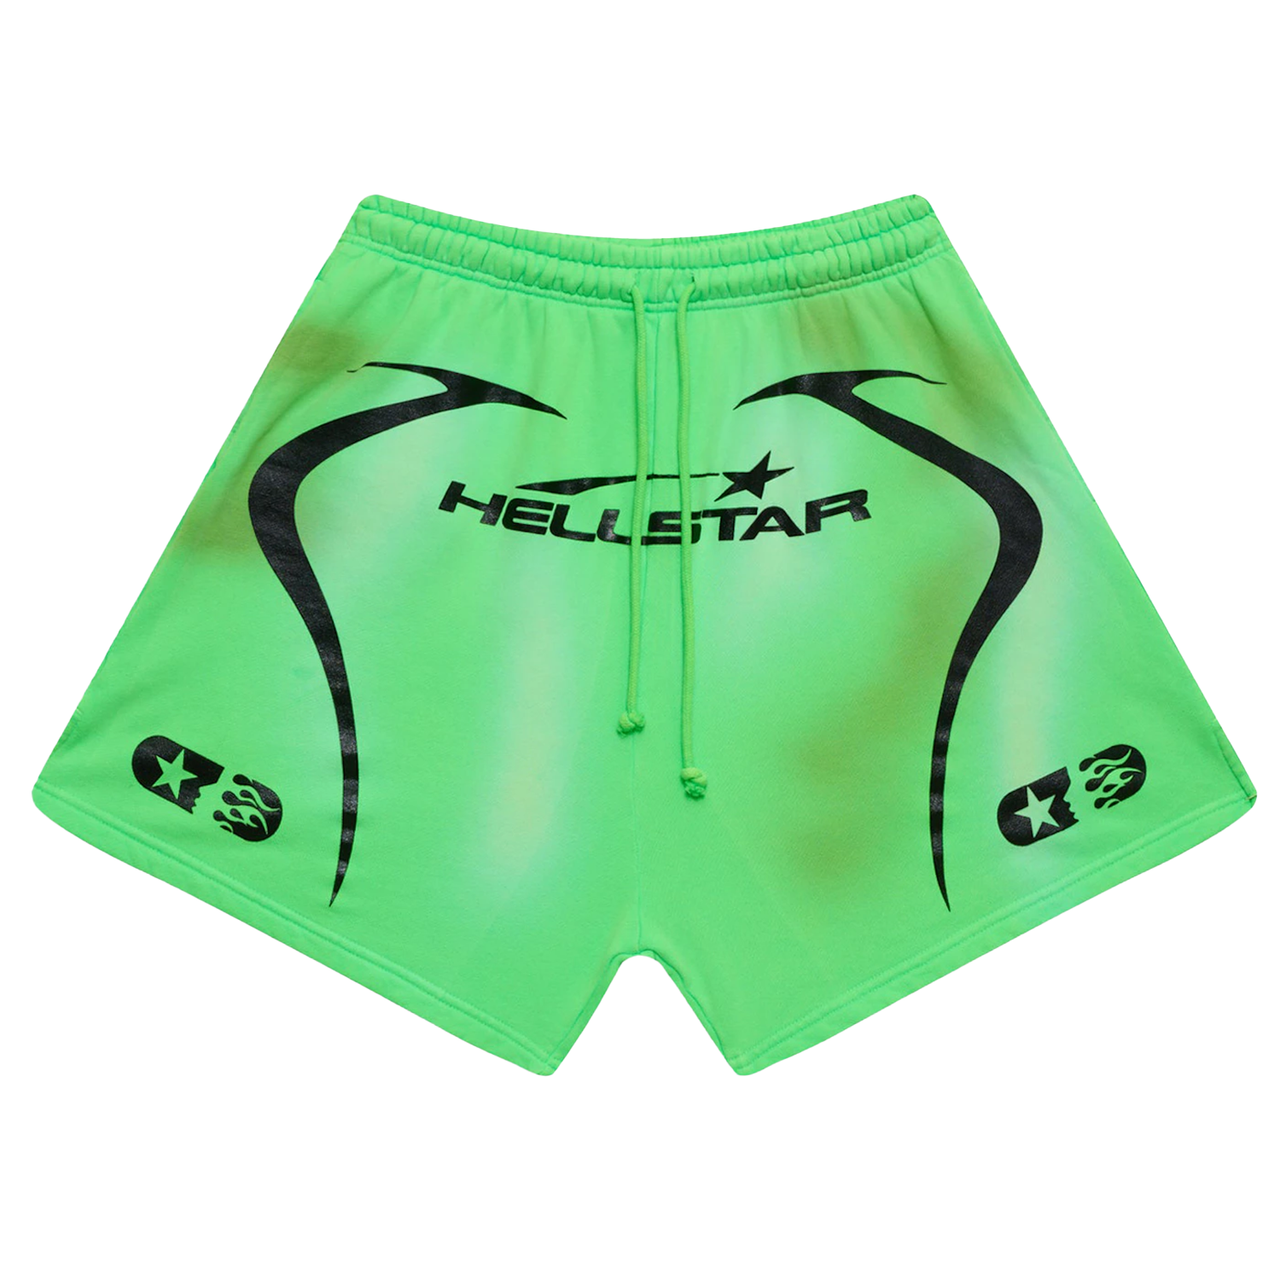 Hellstar Warm Up Shorts Neon